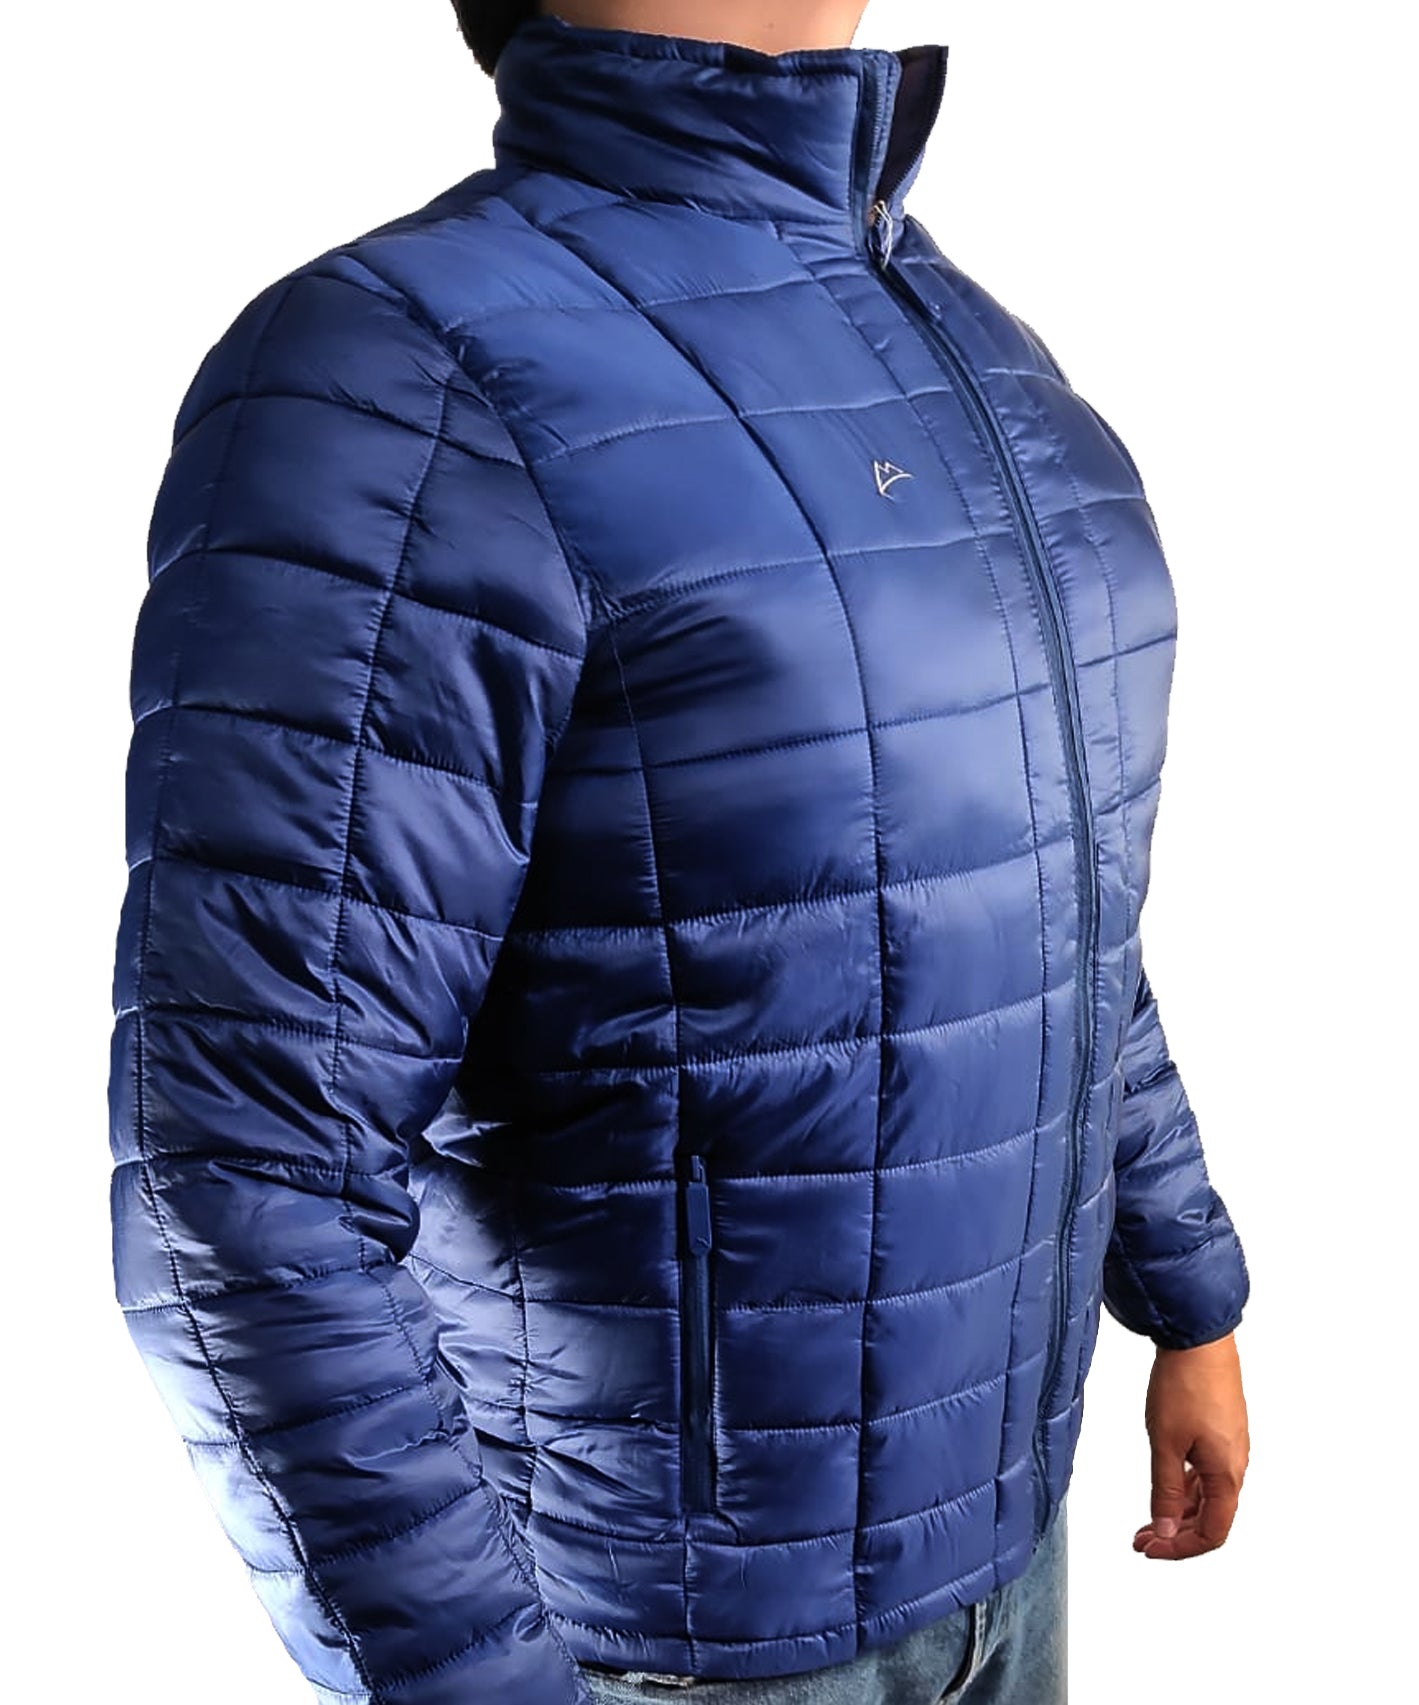 Men's navy nylon jacket JK0419-1